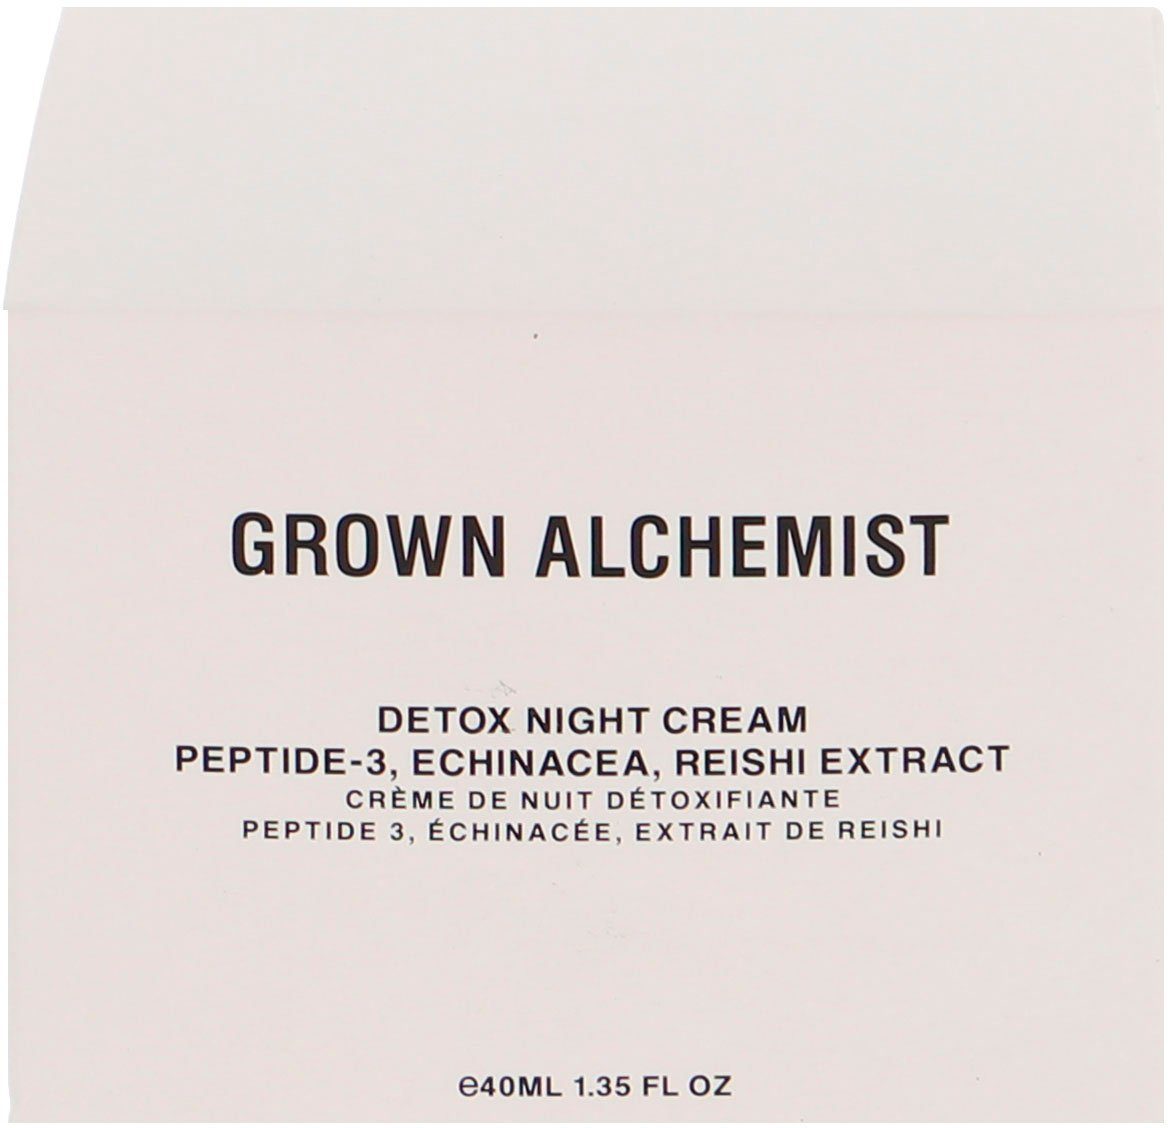 Reishi Nachtcreme Echinacea, Extract Peptide-3, GROWN Detox ALCHEMIST Night Cream,